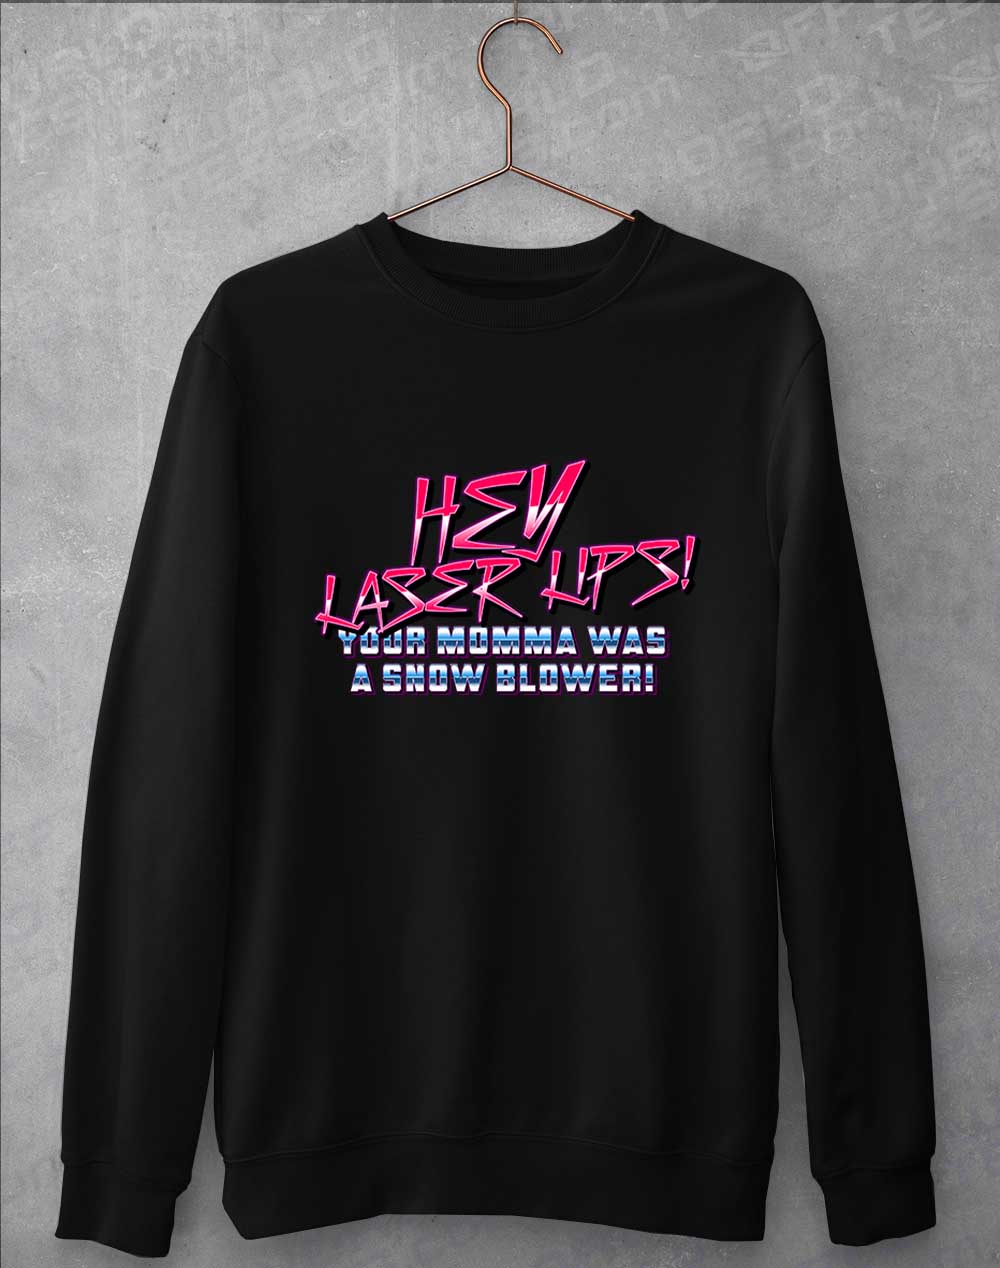 Jet Black - Hey Laser Lips Sweatshirt